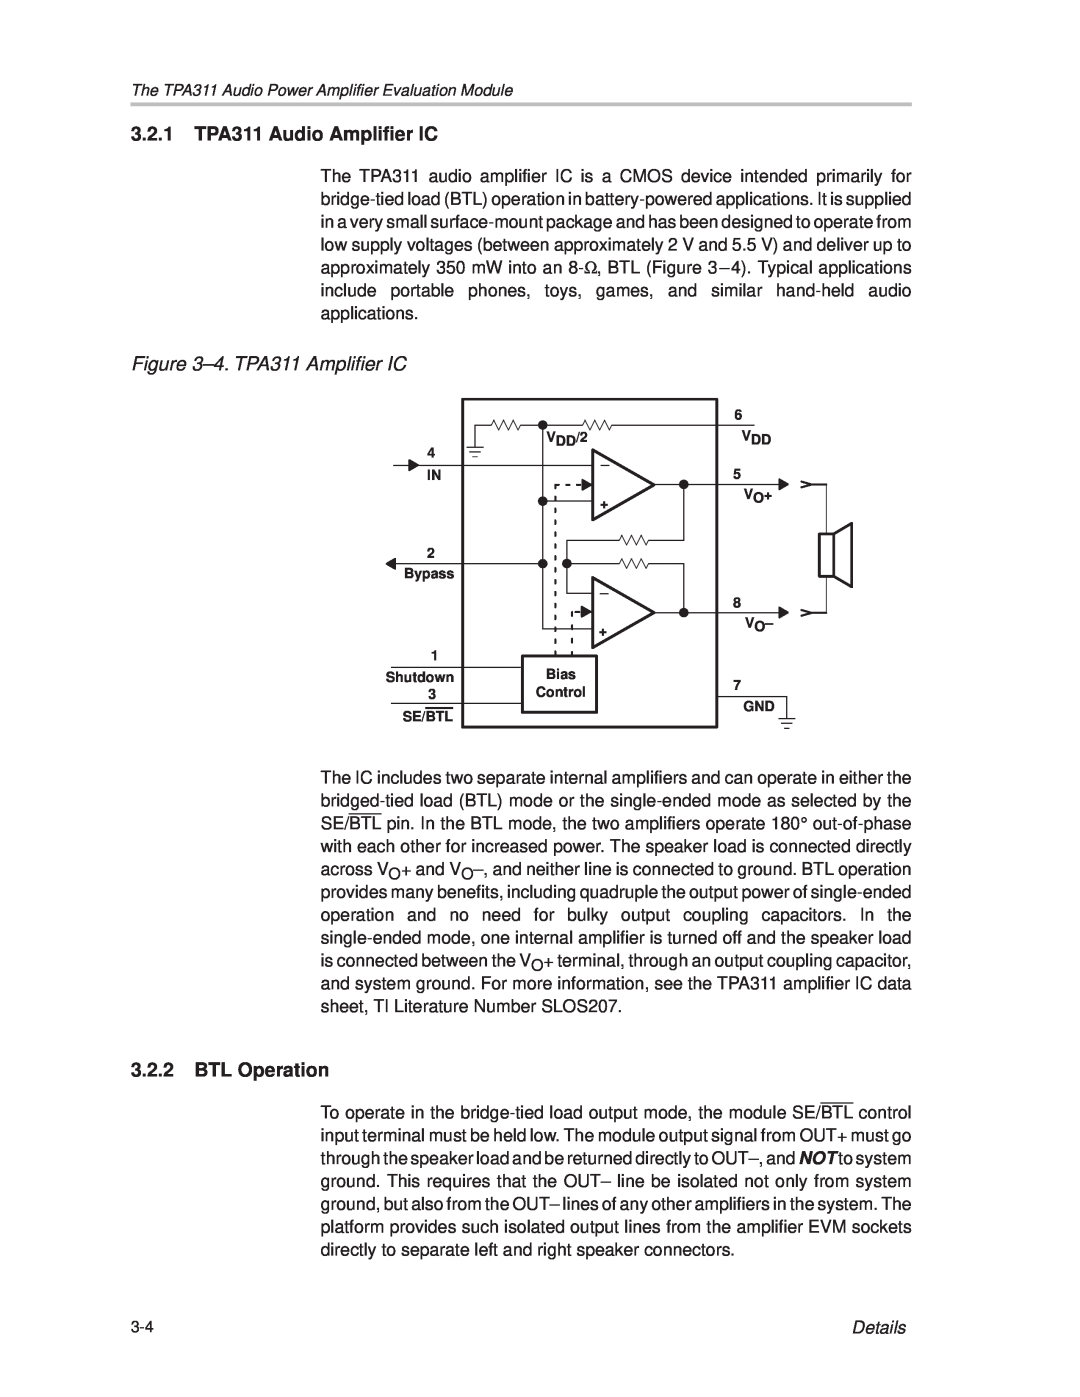 Texas Instruments TPA 311 manual 3.2.1 TPA311 Audio Amplifier IC, ±4. TPA311 Amplifier IC, BTL Operation, Details 